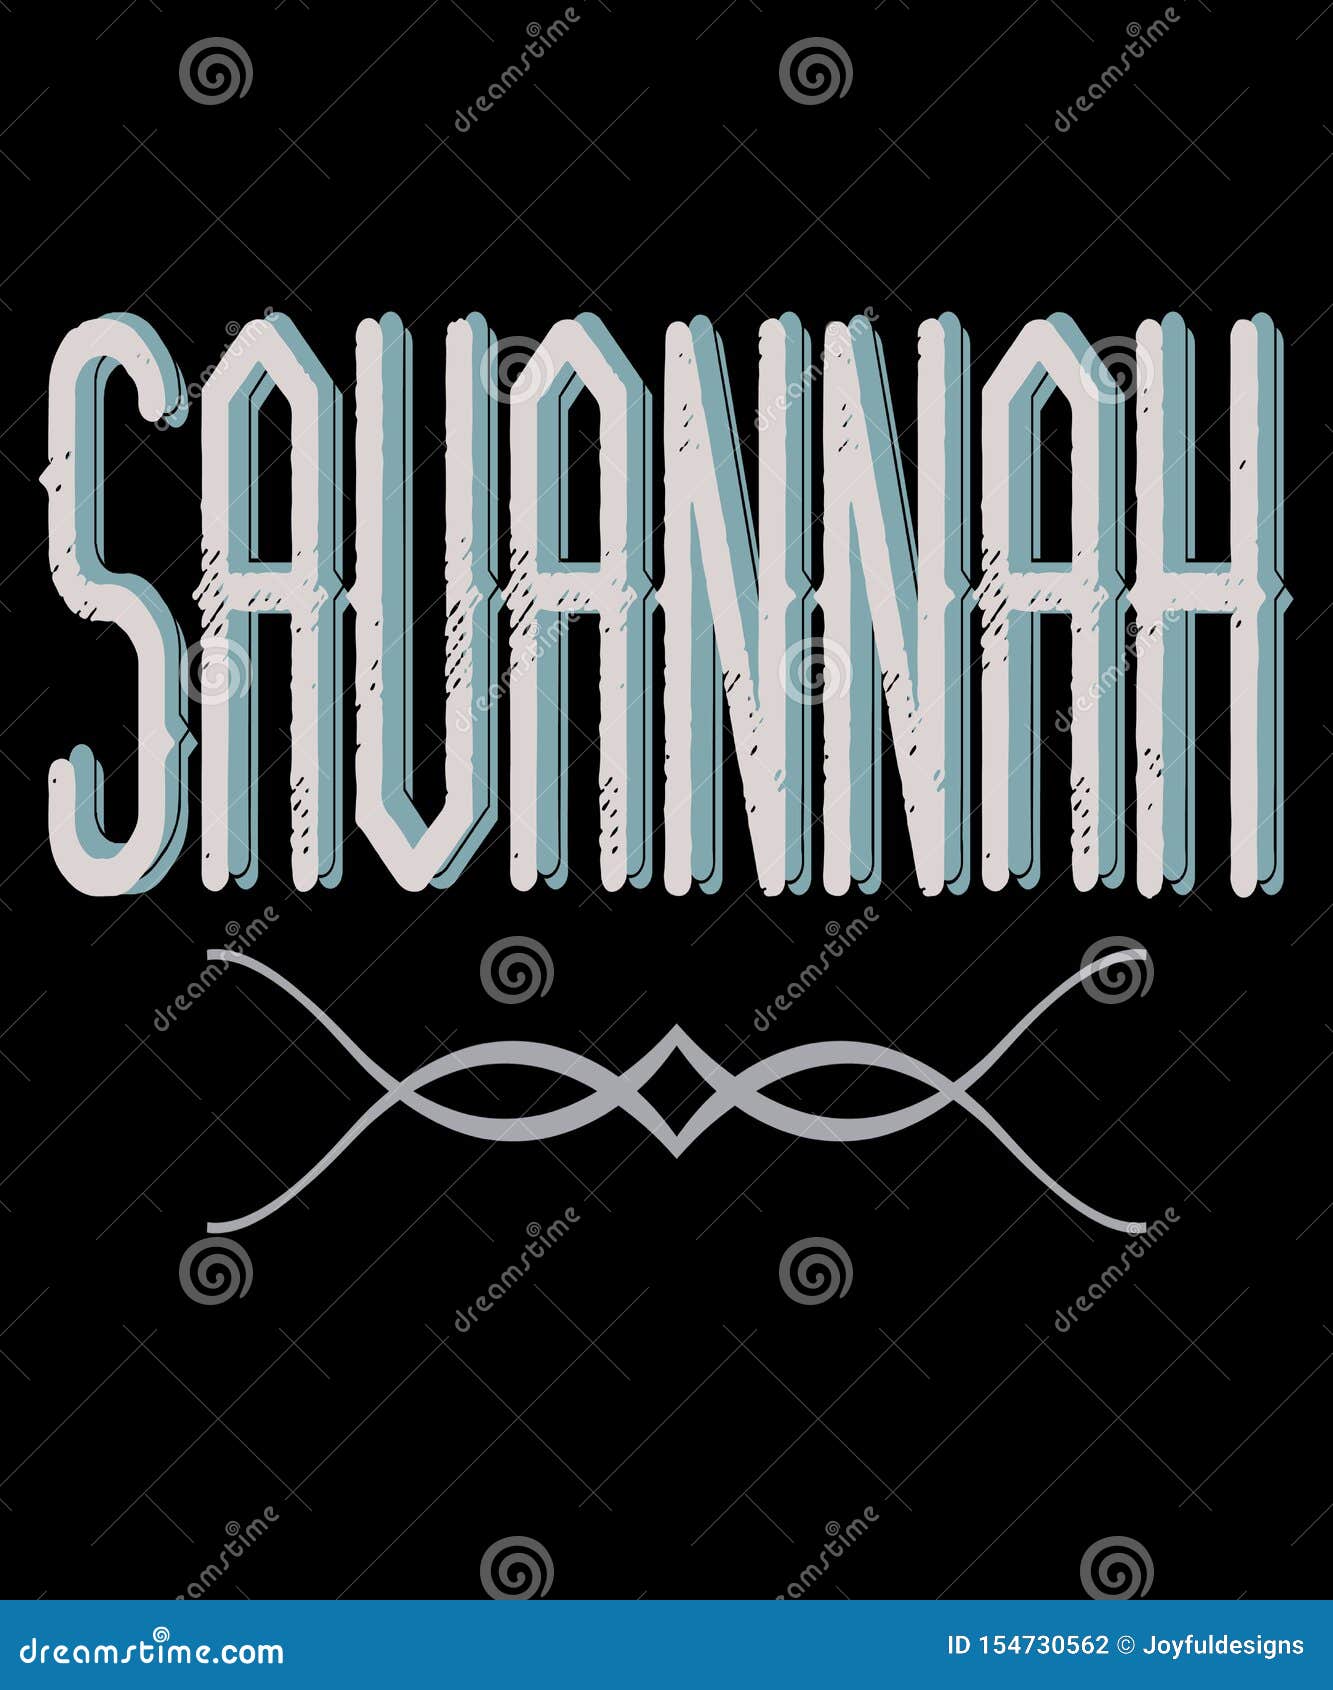 How Popular is the Name Savannah  